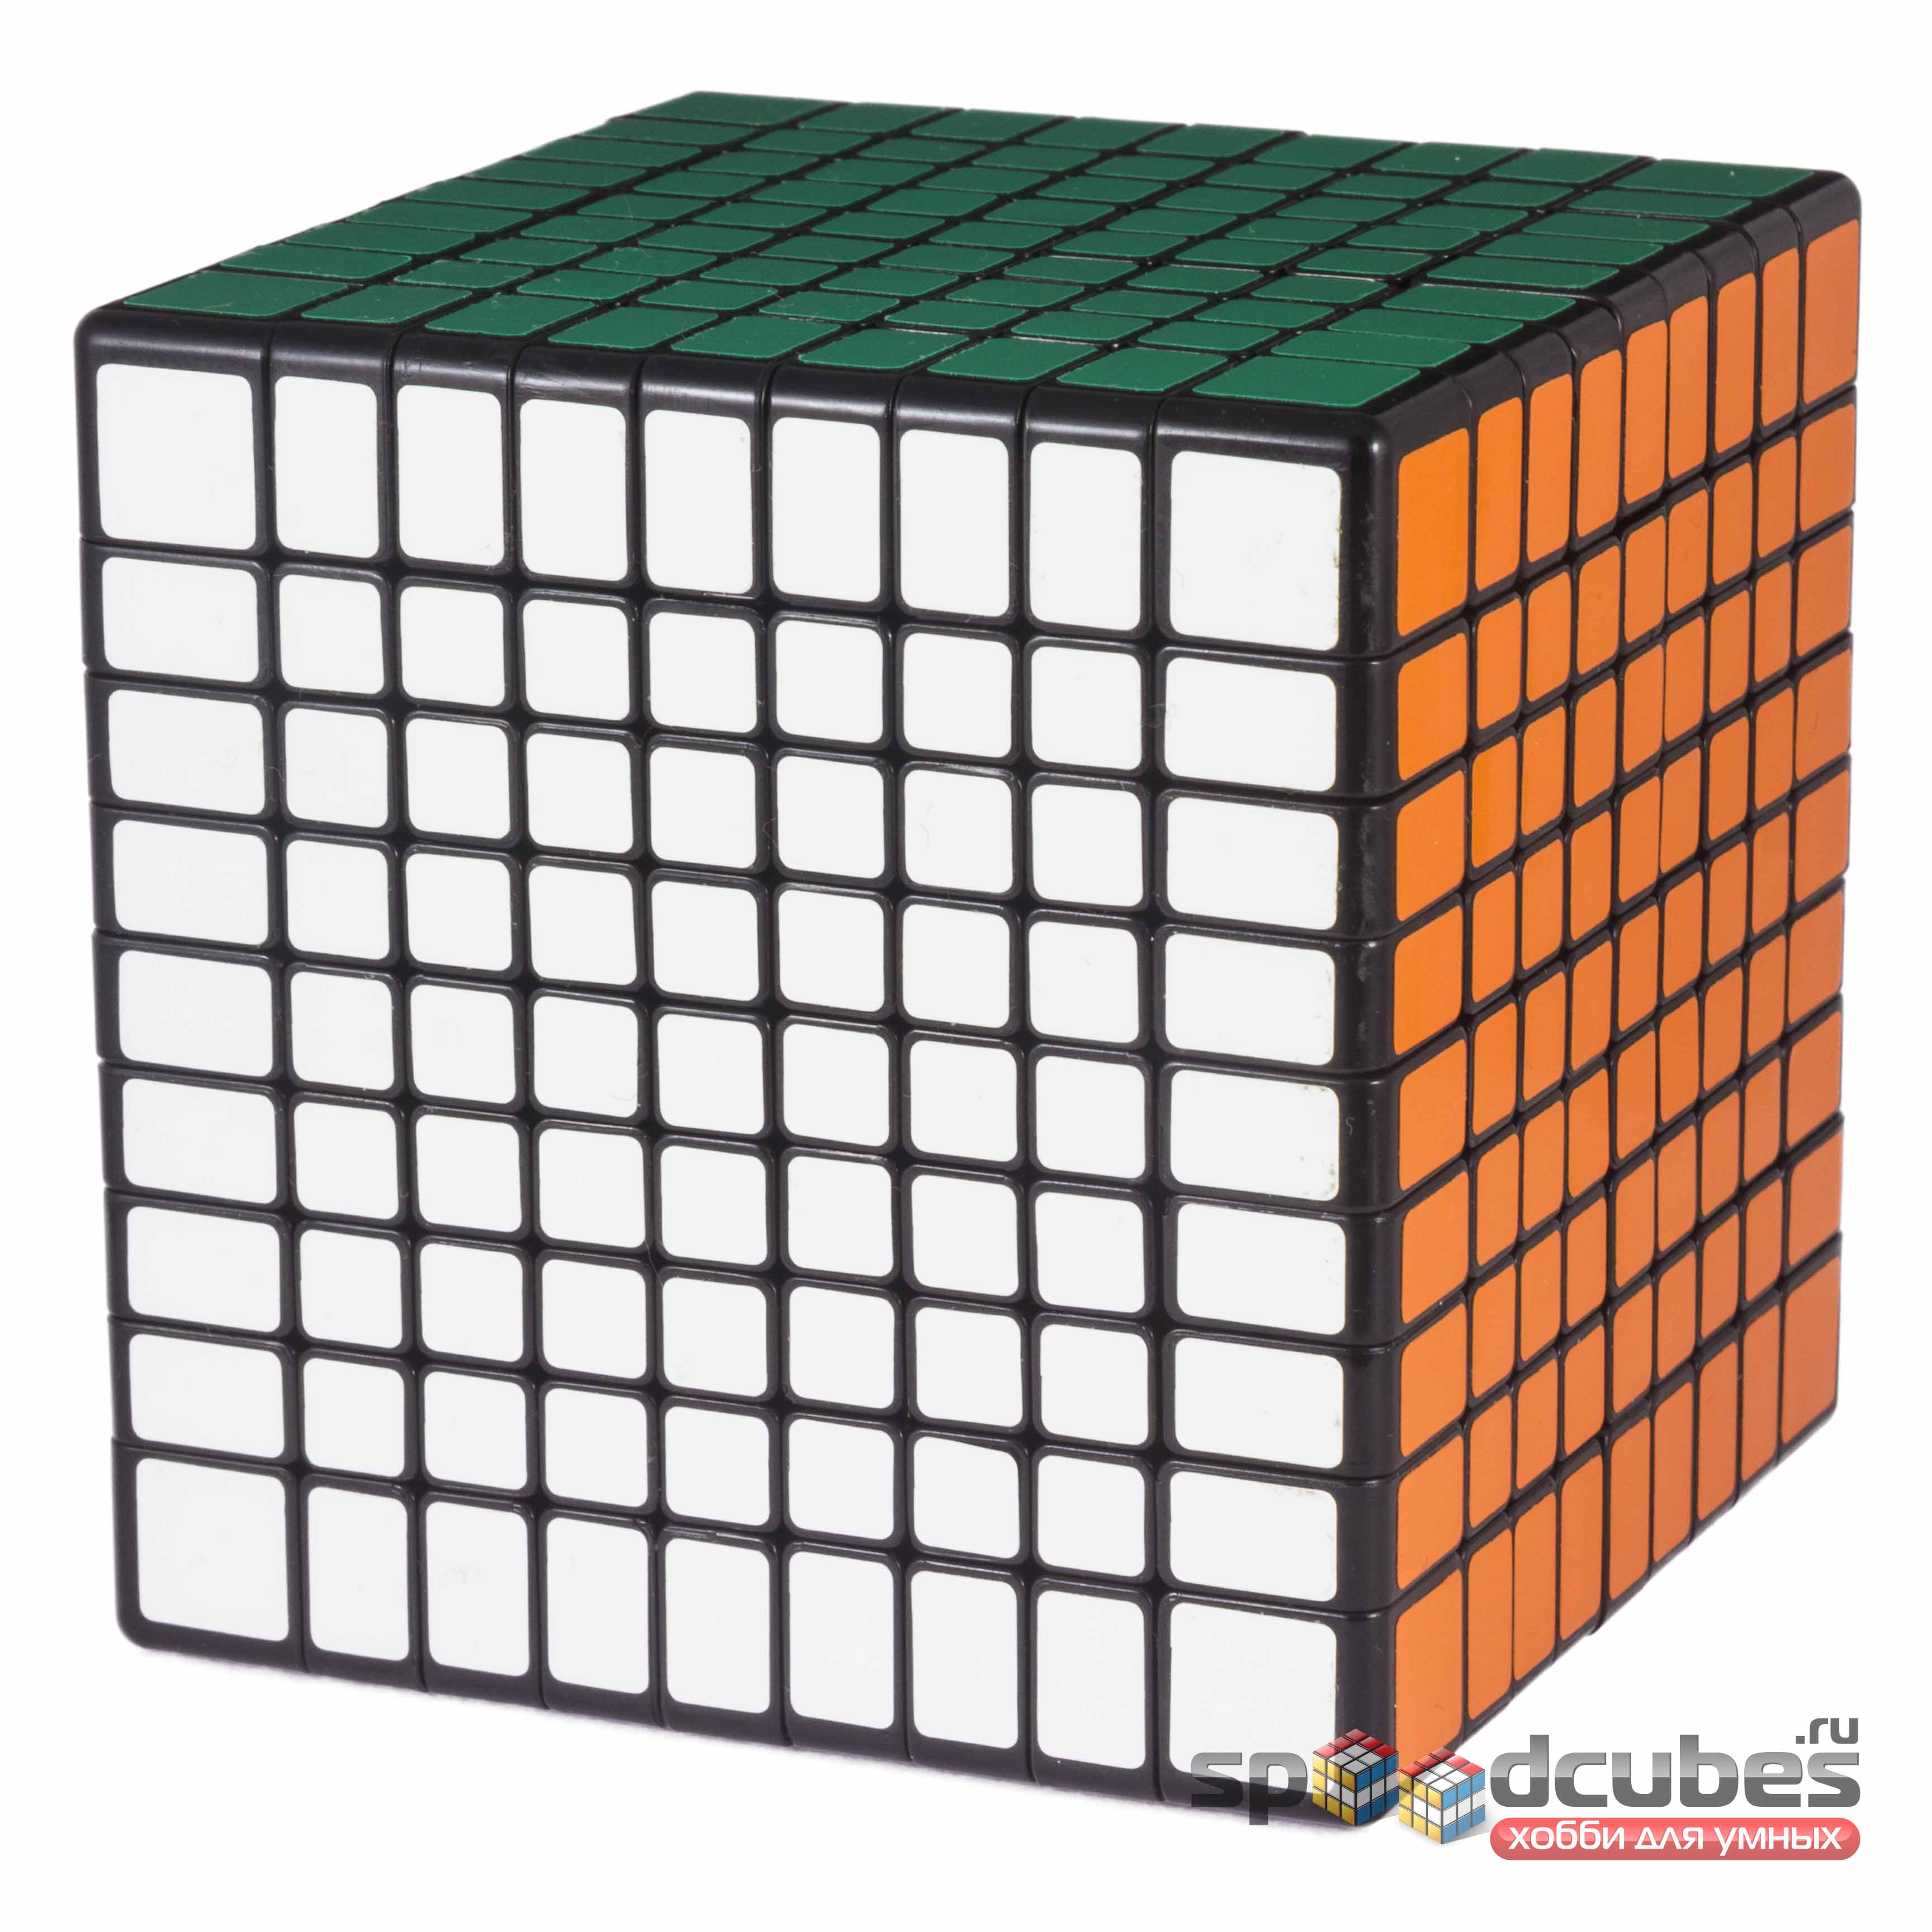 Купить куб 9. Кубик рубик 9x9. Кубик Рубика 9х9х9. Вайлдберриз кубик-Рубика 9х9. Головоломка Shengshou 3x3x3 Legend с наклейками.